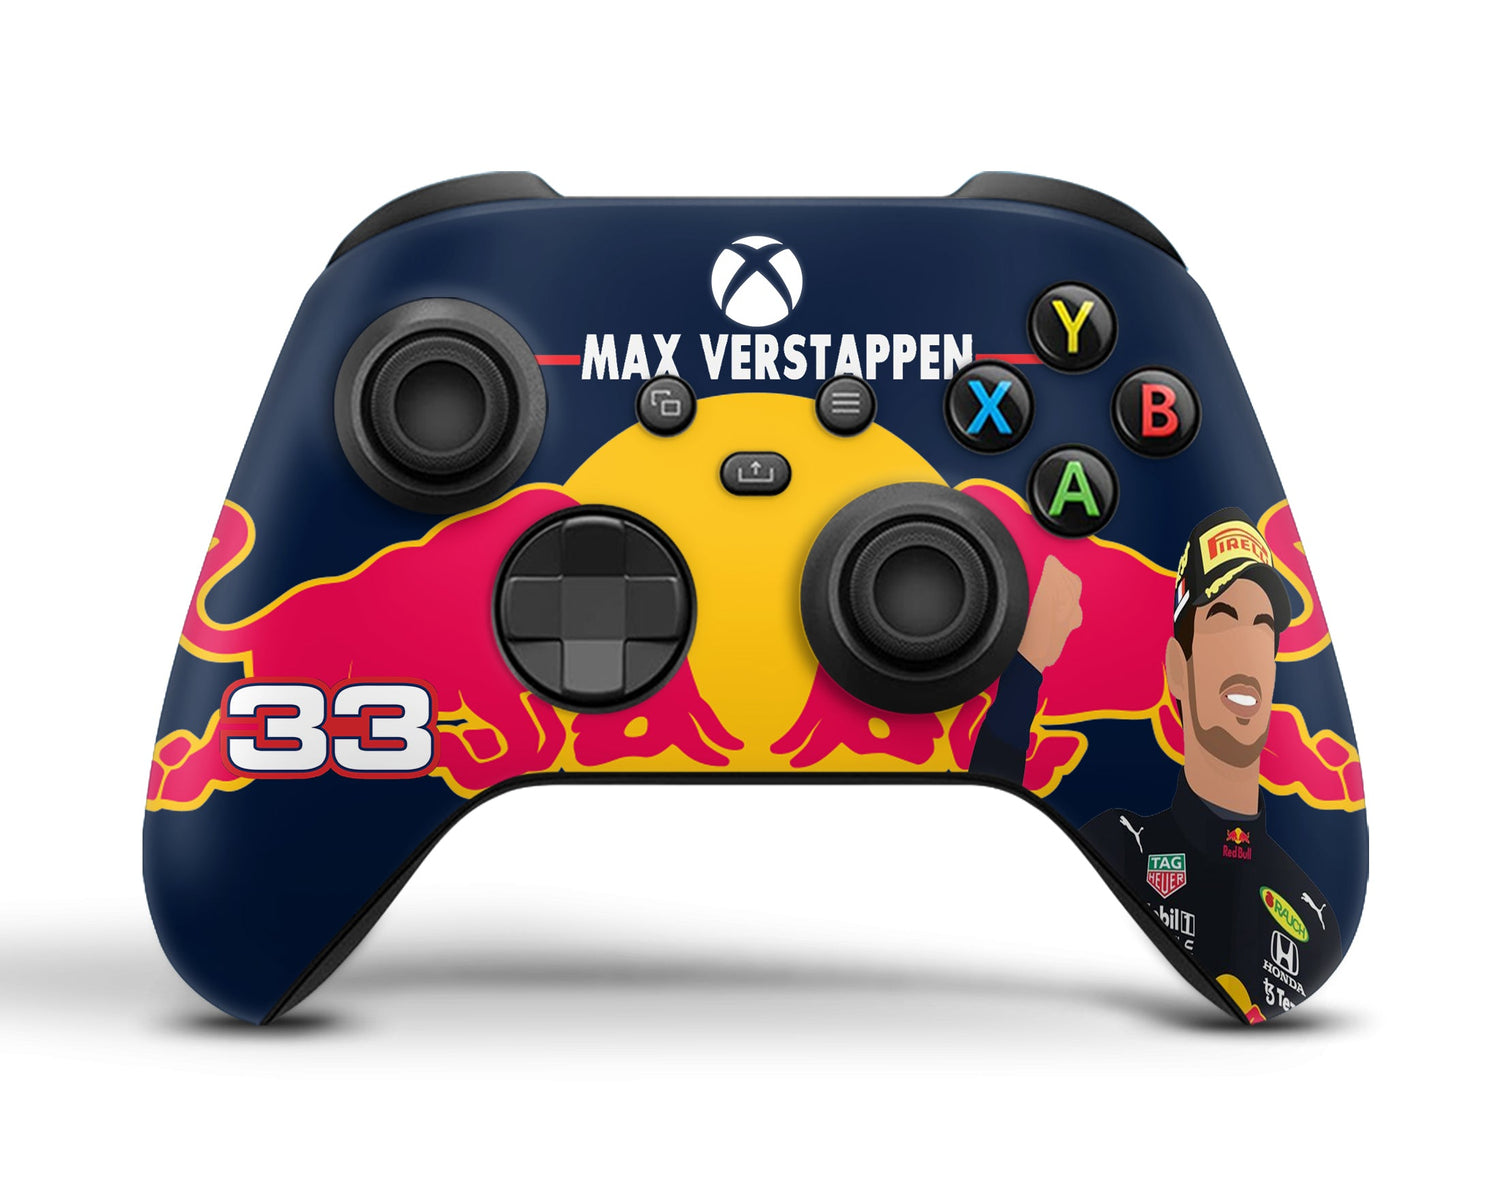 Lux Skins Xbox Series X Max Verstappen F1 Red Bull Xbox Series X Skins - Sports Formula 1 & S Skin